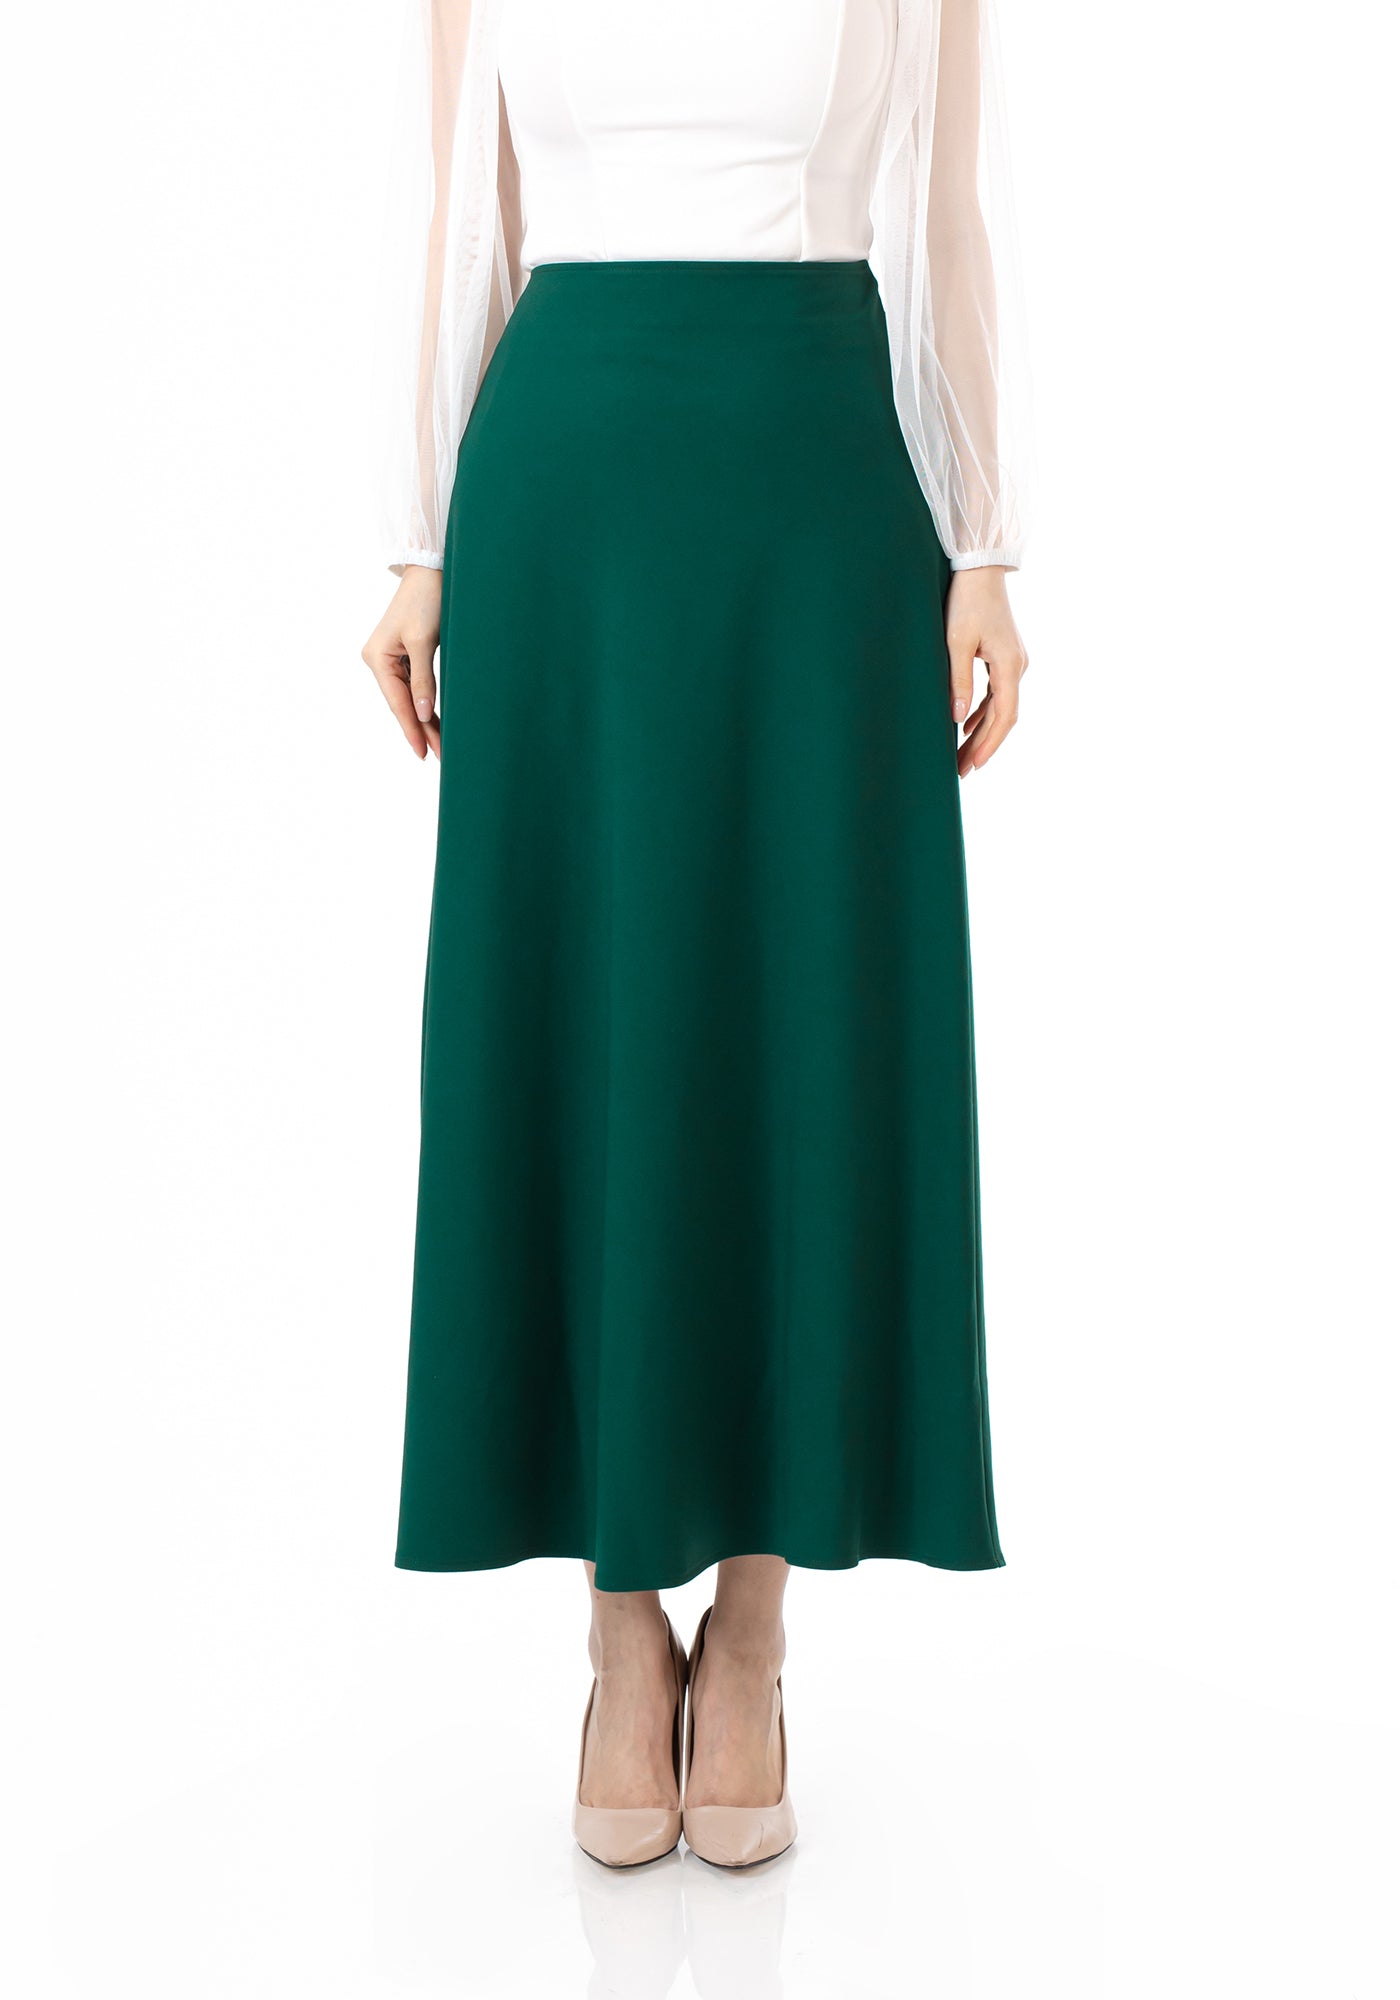 G-Line Emerald Green A-Line Style Comfy Maxi Dress Skirt